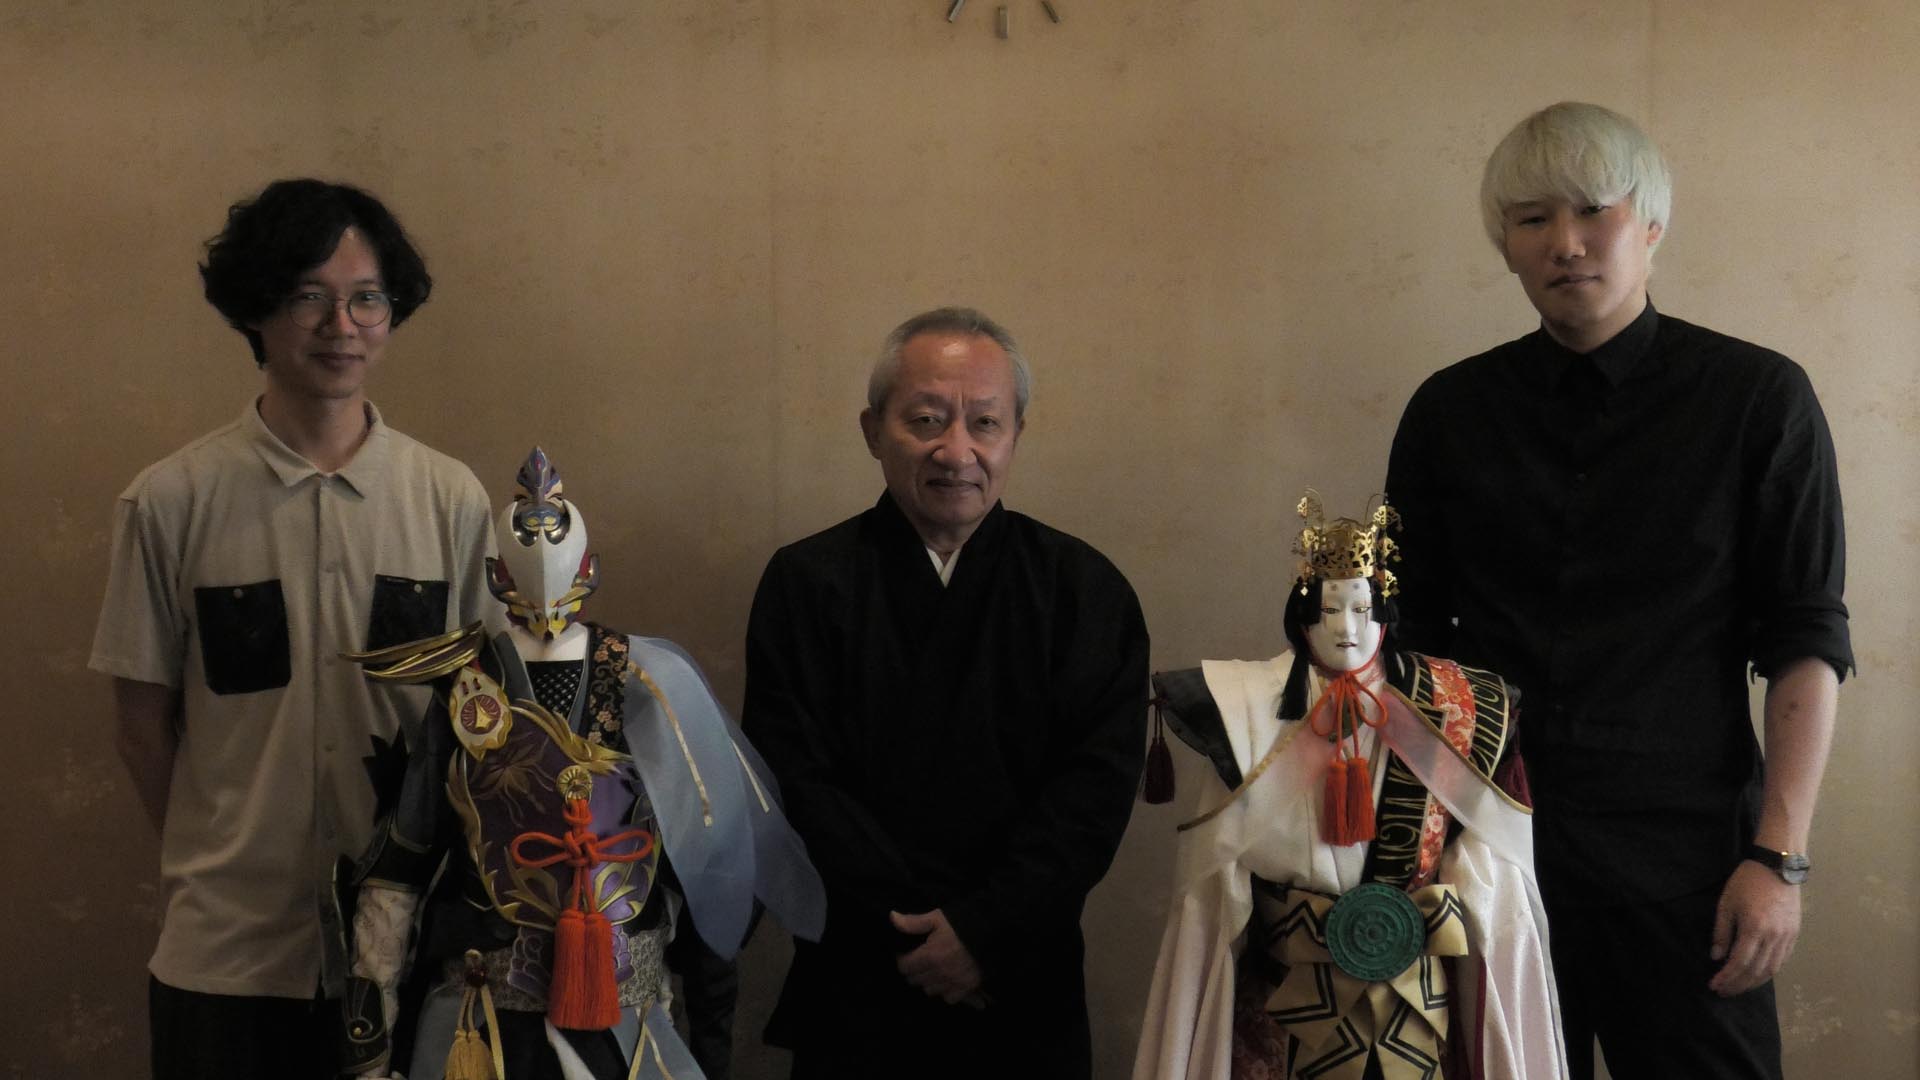 Kunitsu-Gami puppeteers and creators Image